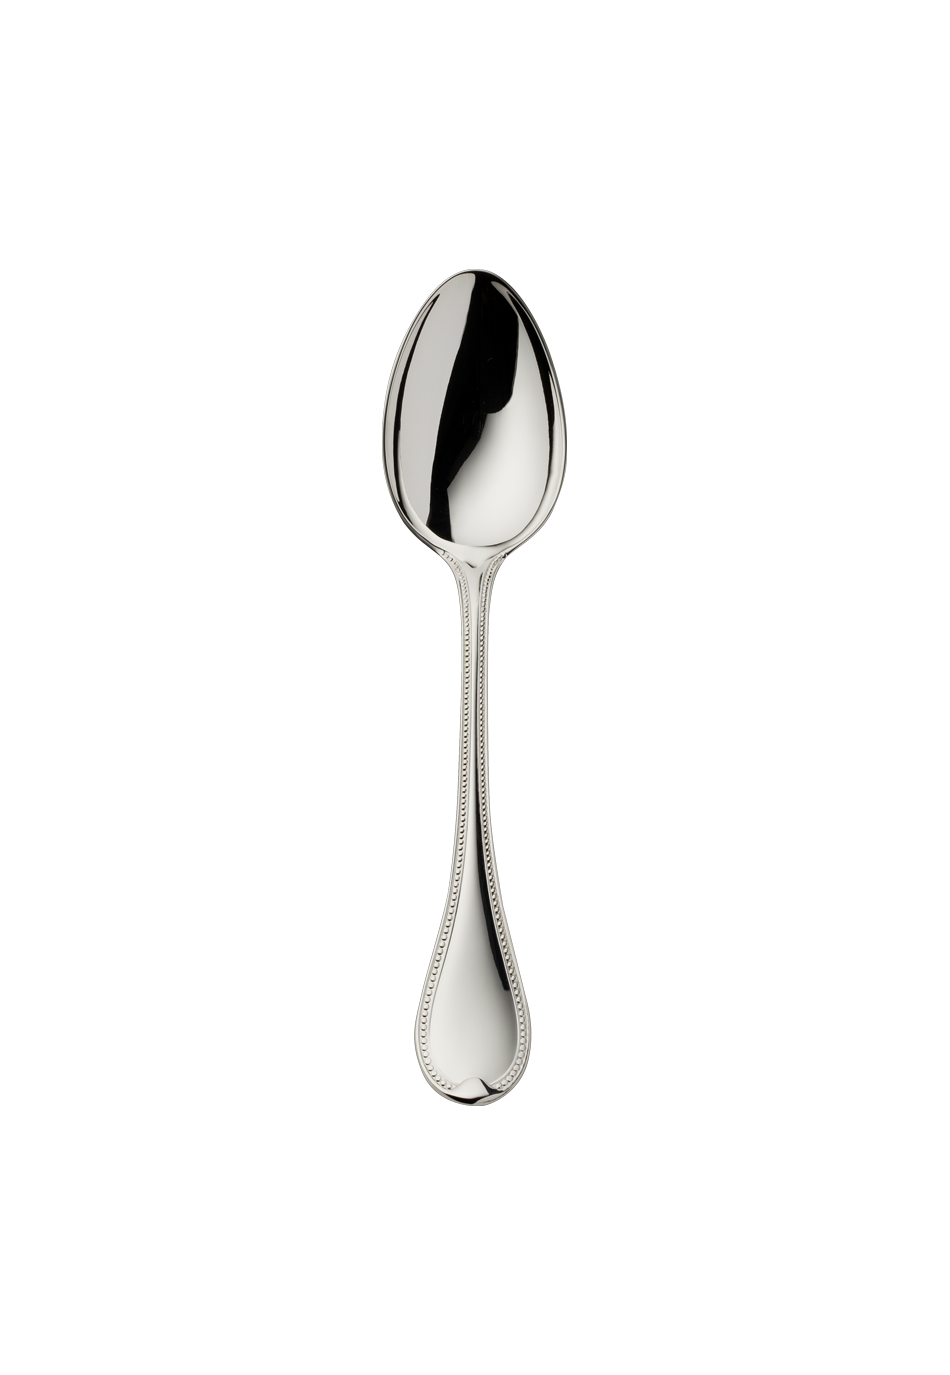 Franz. Perl Children's Spoon (150g massive silverplated)